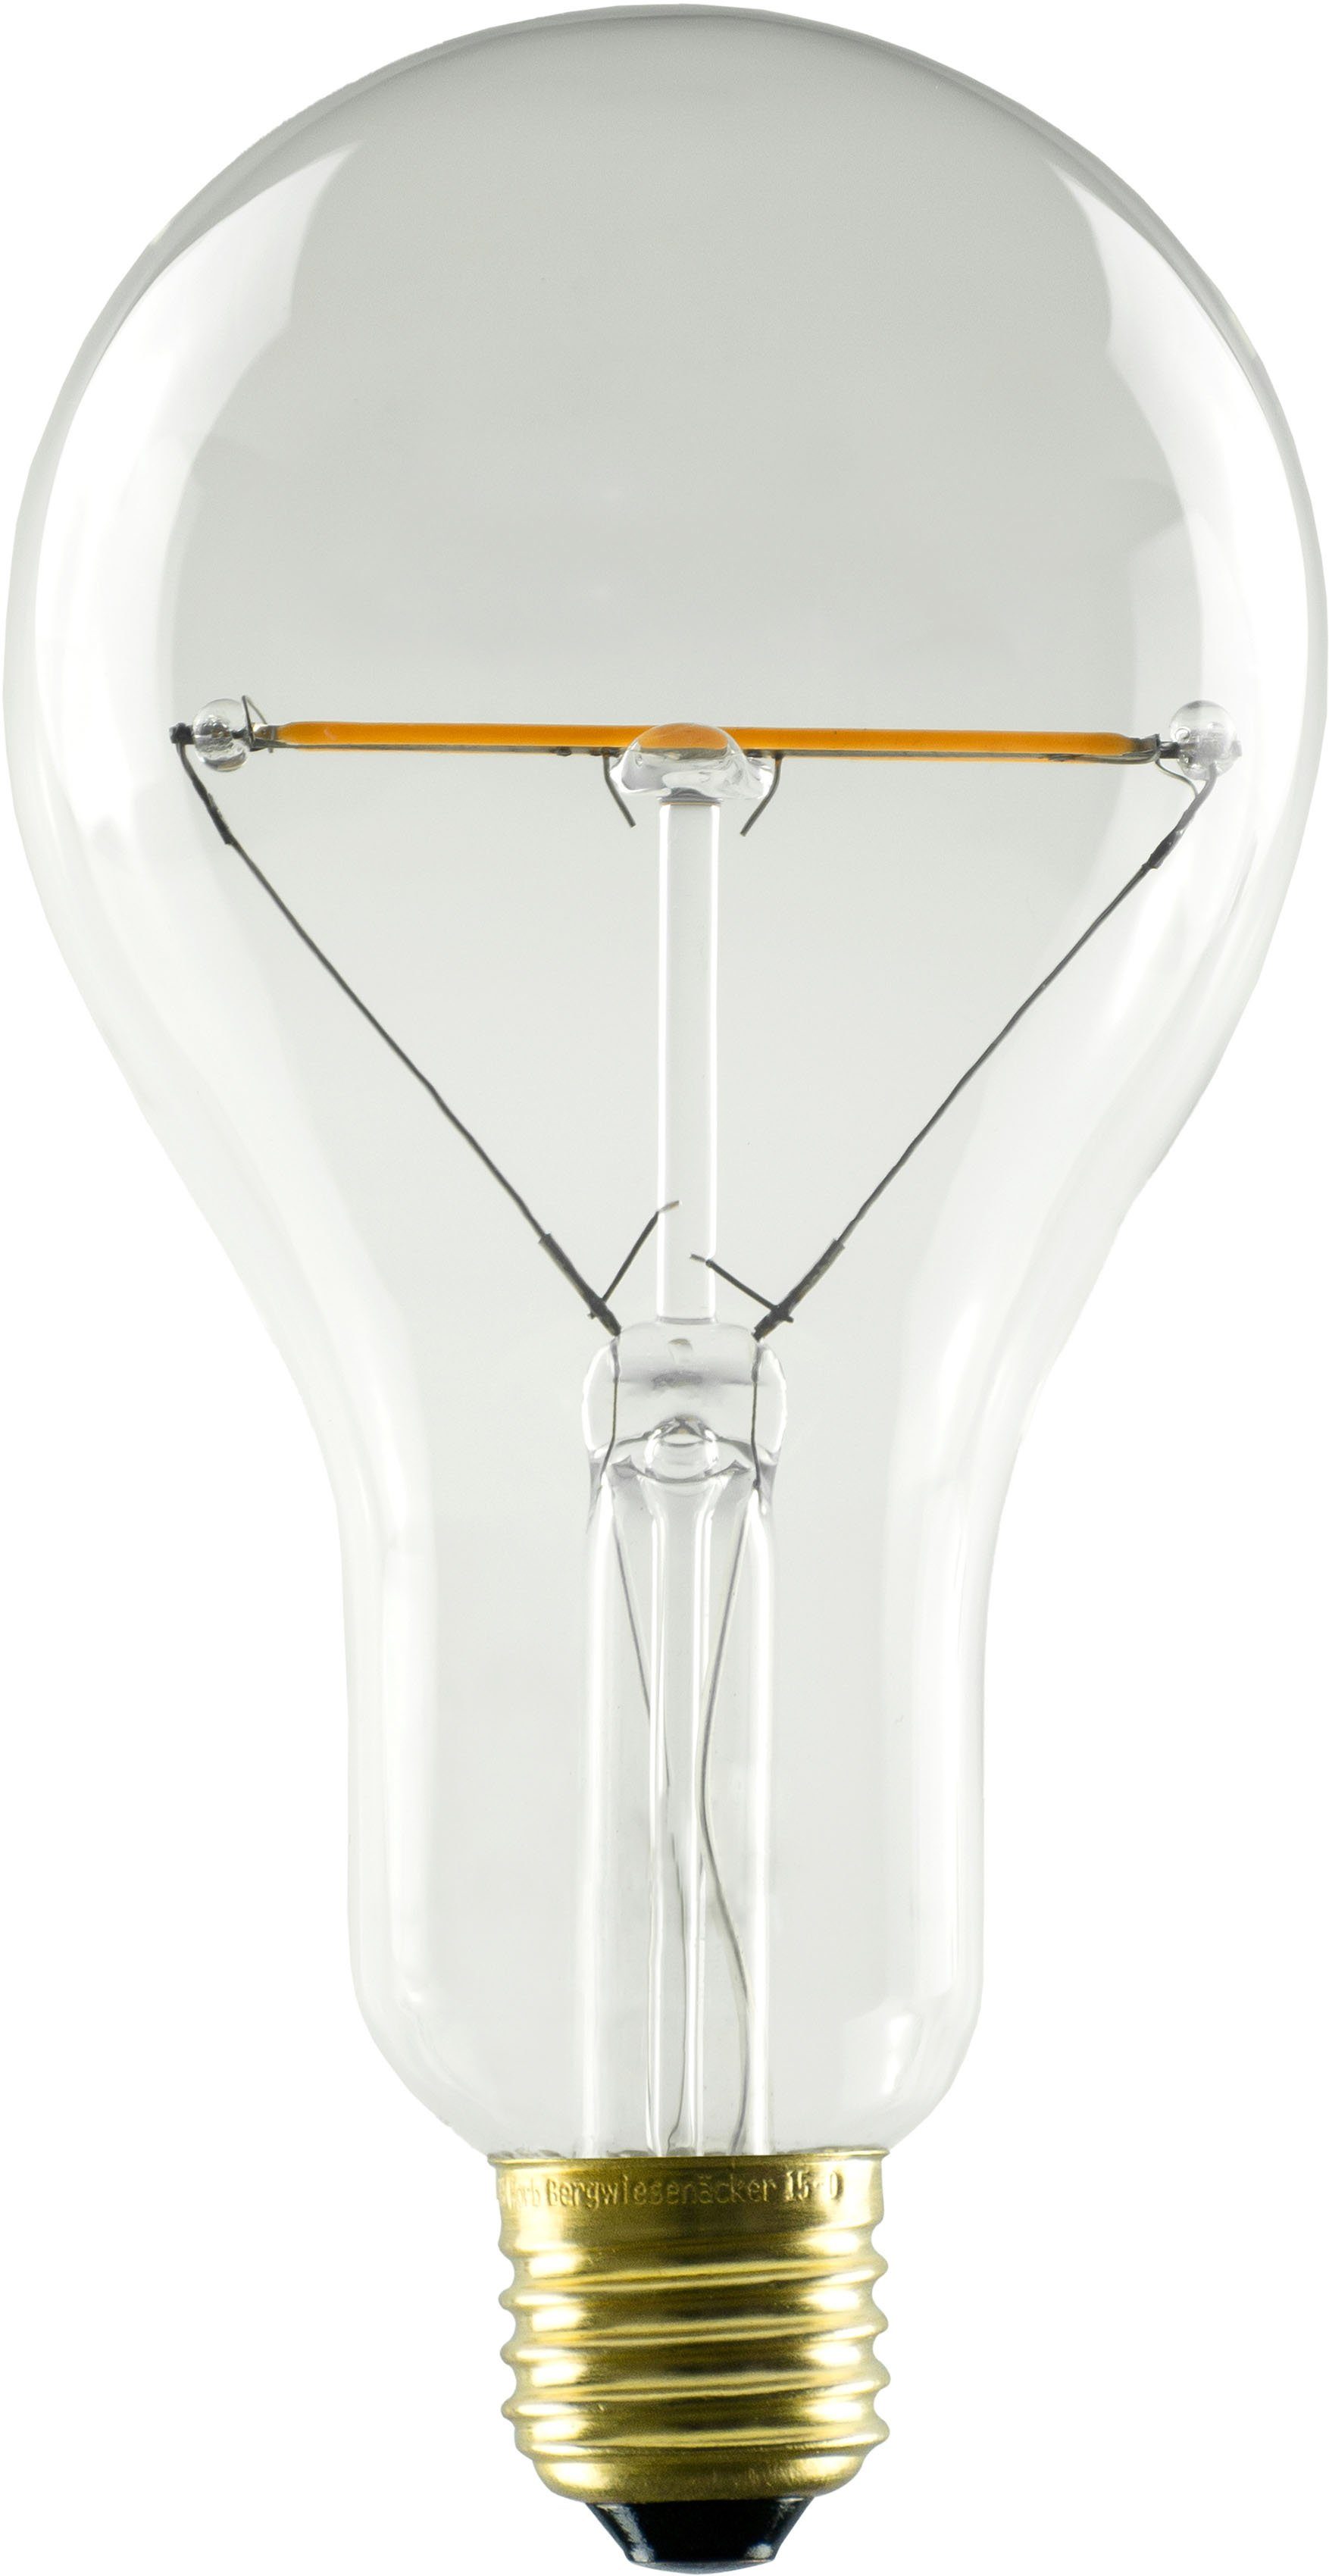 SEGULA LED-Leuchtmittel Vintage Line Balance, E27, 1 St., Warmweiß, dimmbar, Glühlampe A90 klar - Balance, E27